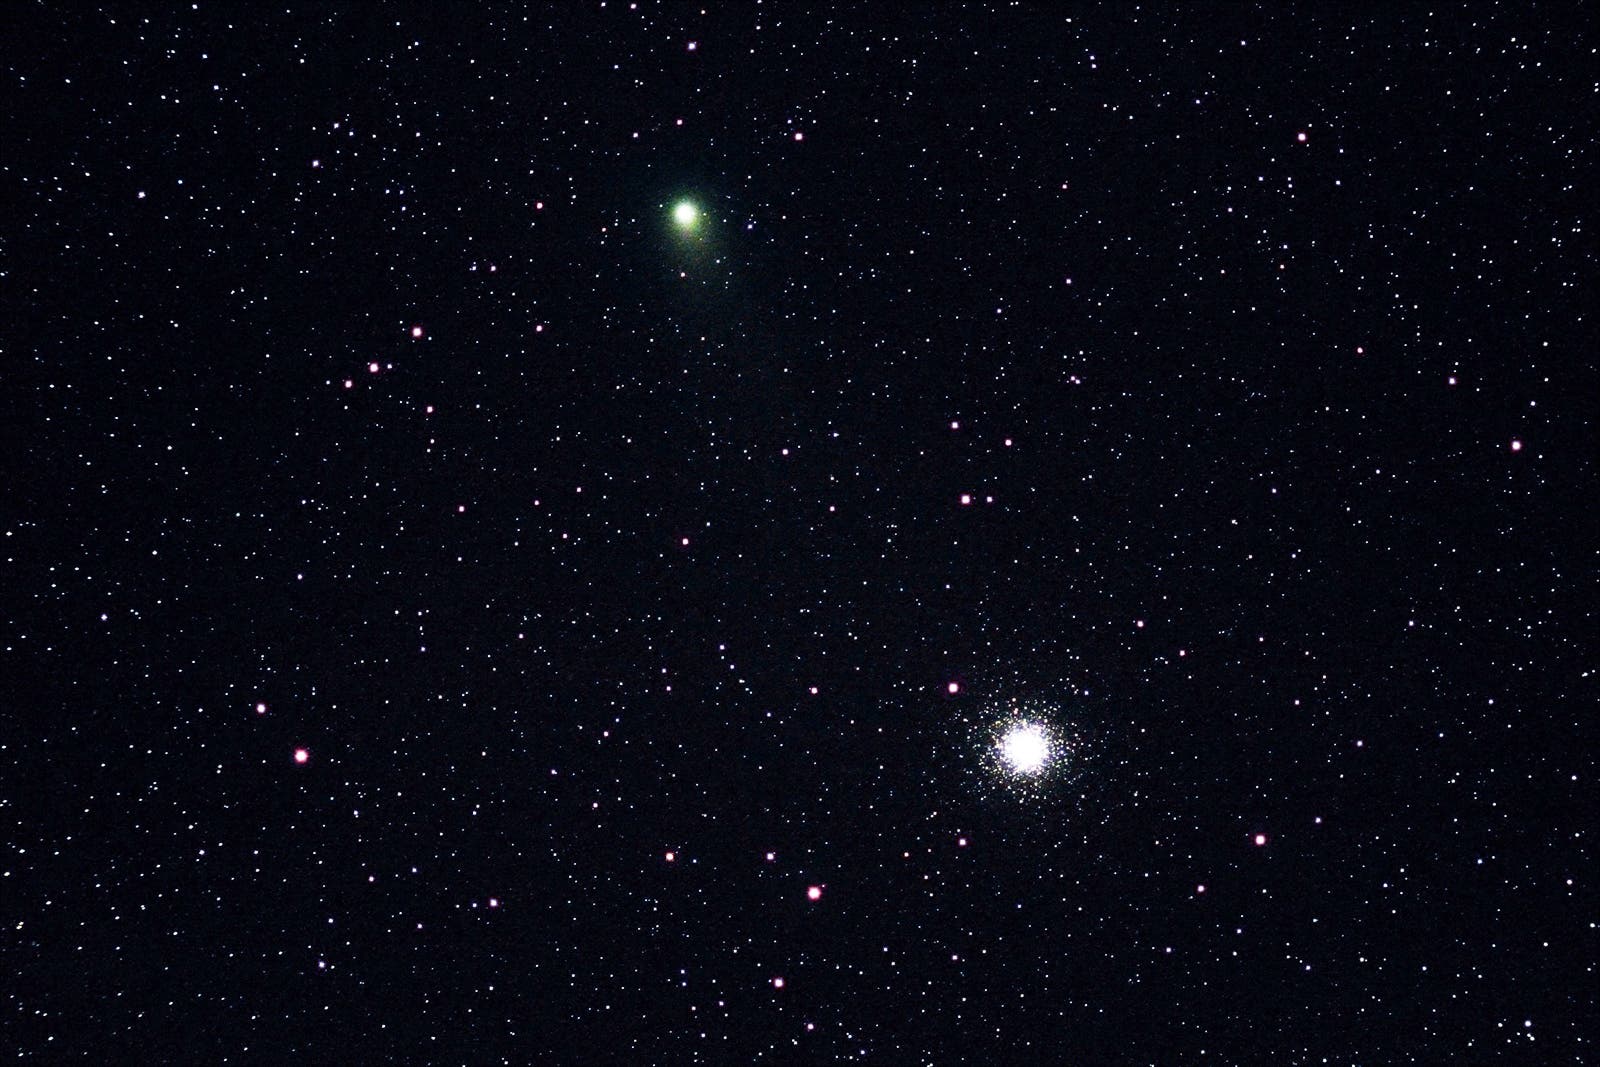 Komet Garradd bei M 15